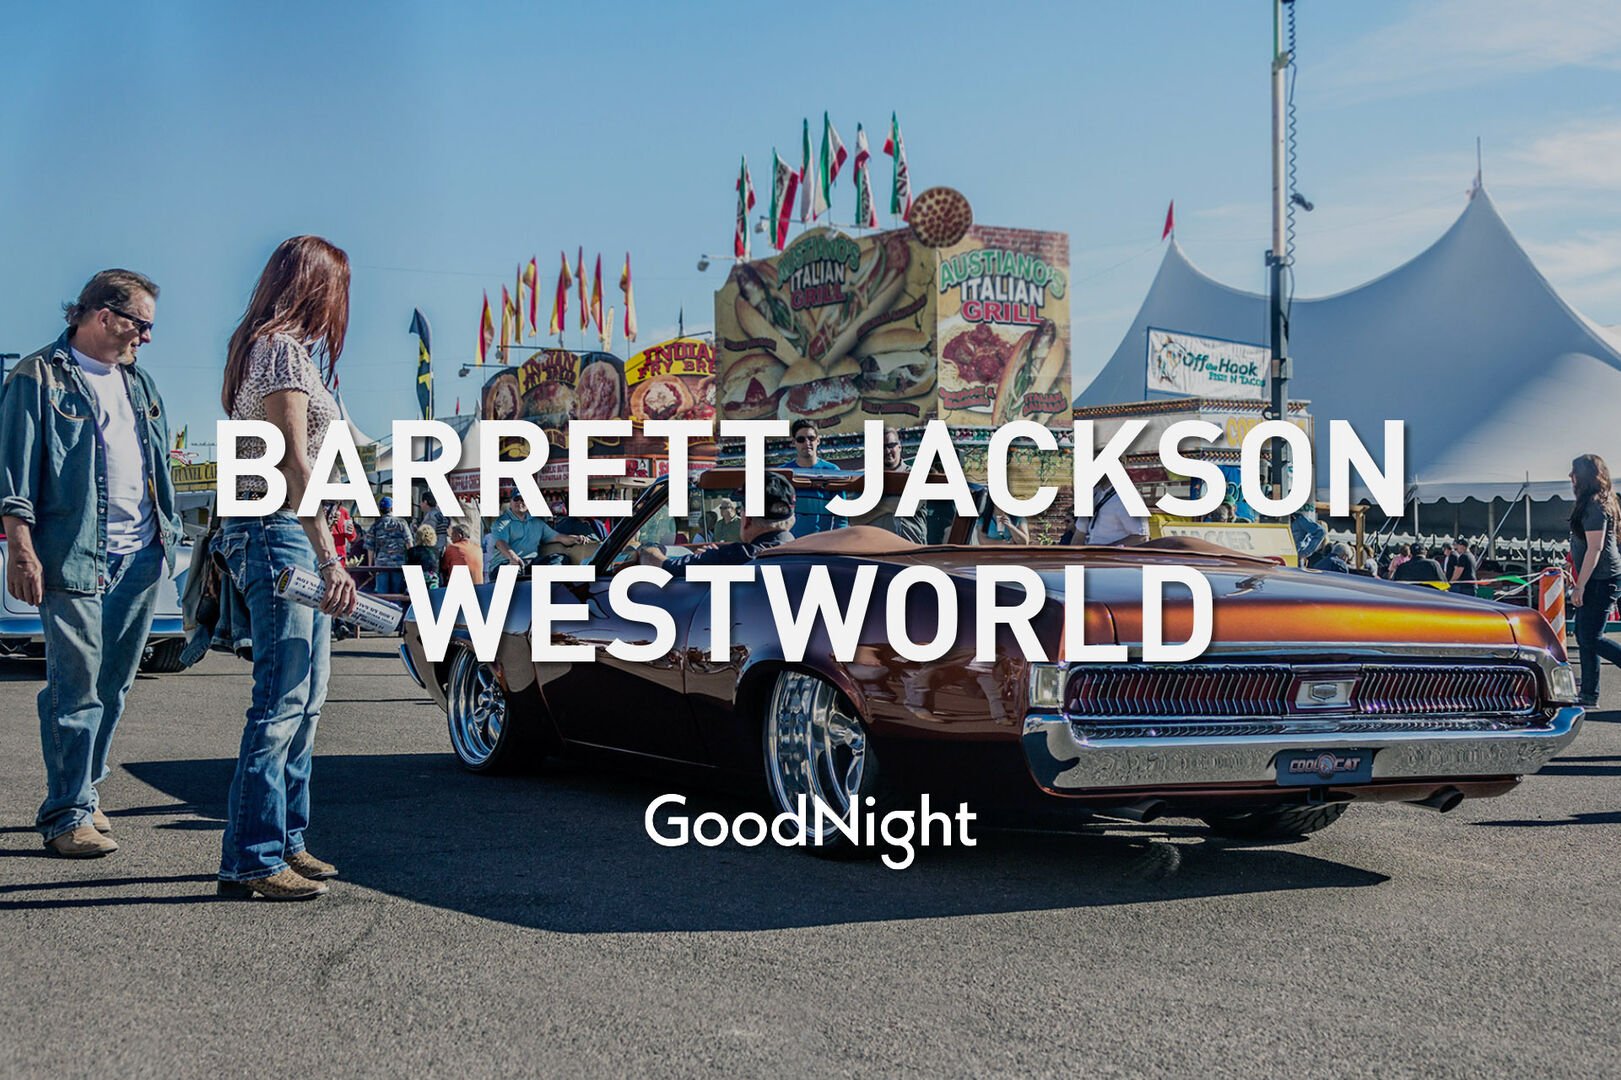 20 mins to Barrett Jackson West World